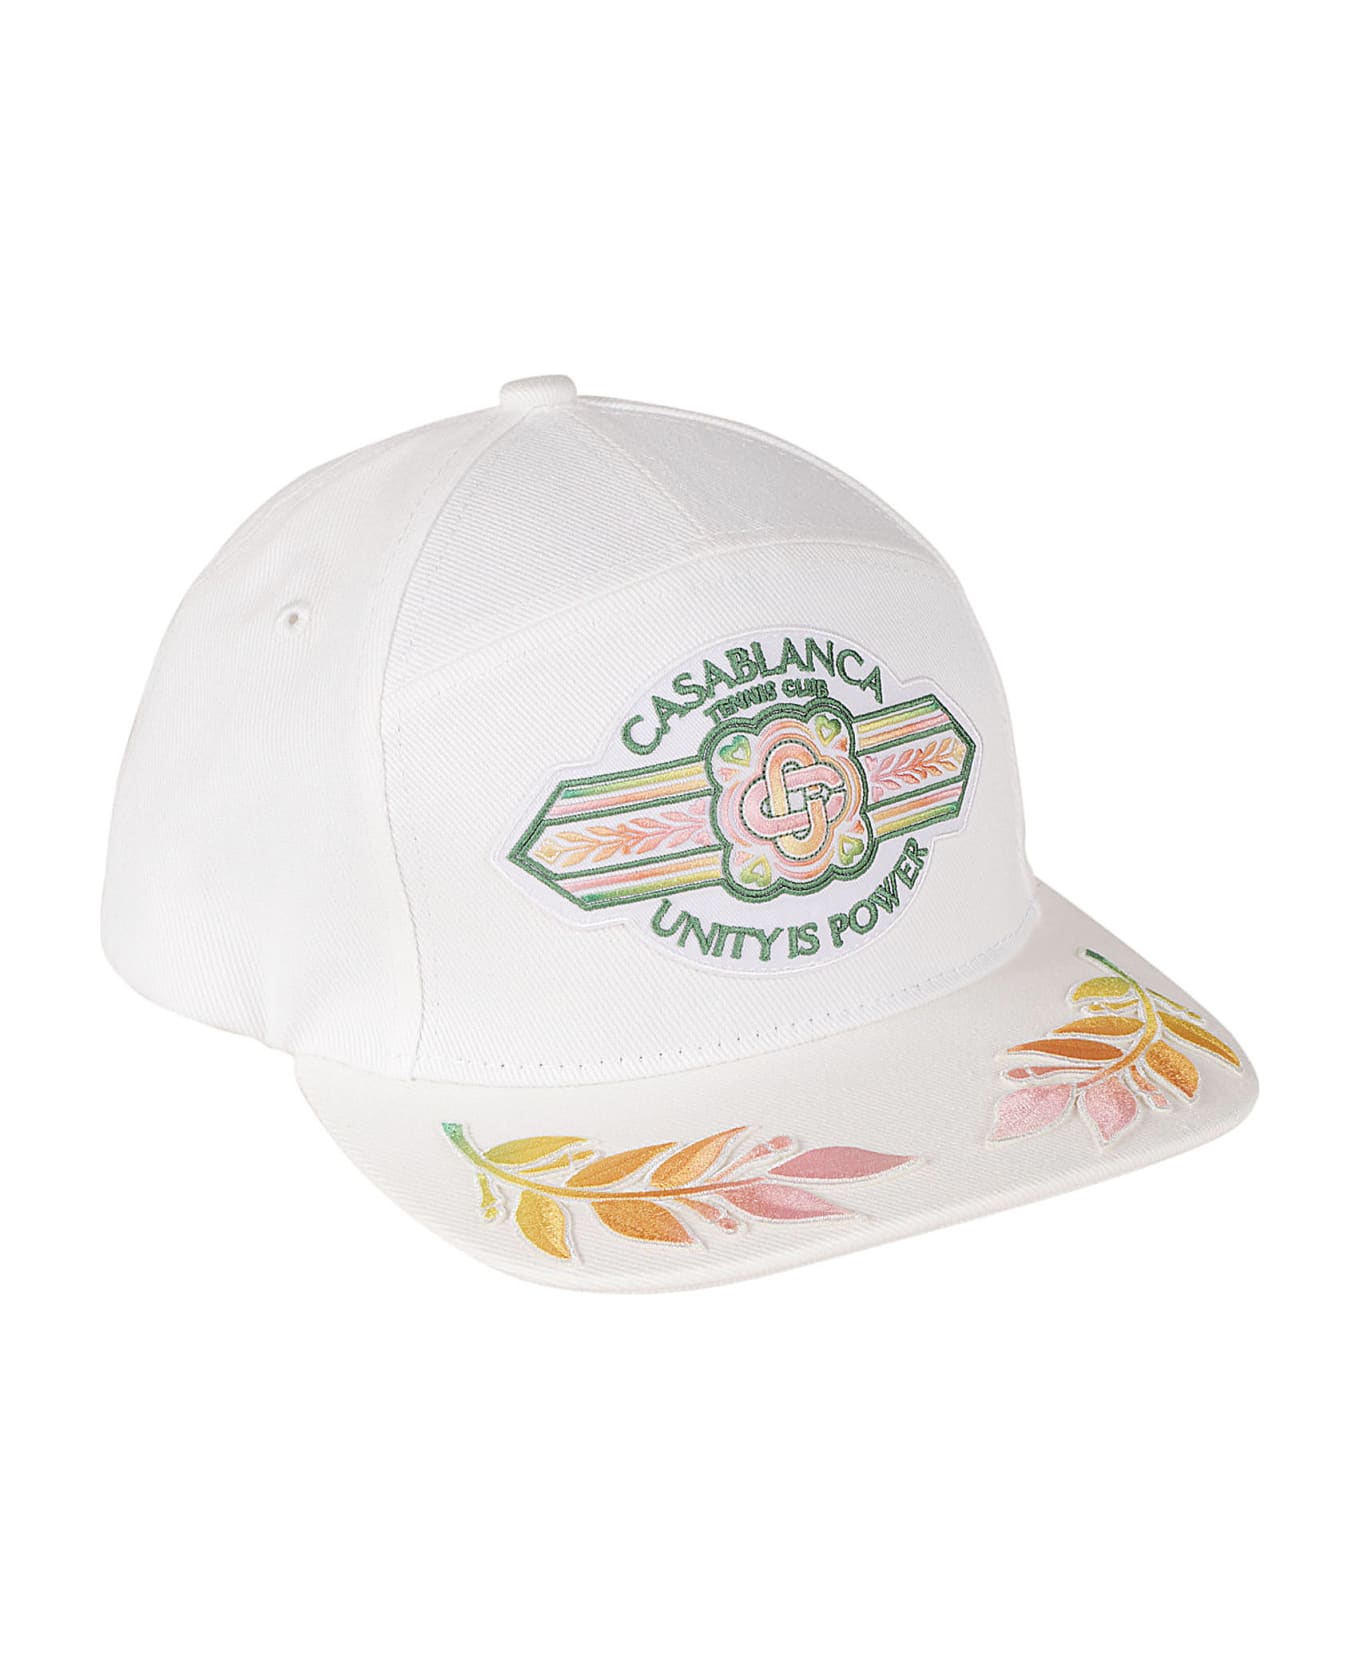 Casablanca Embroidered Baseball Cap - White